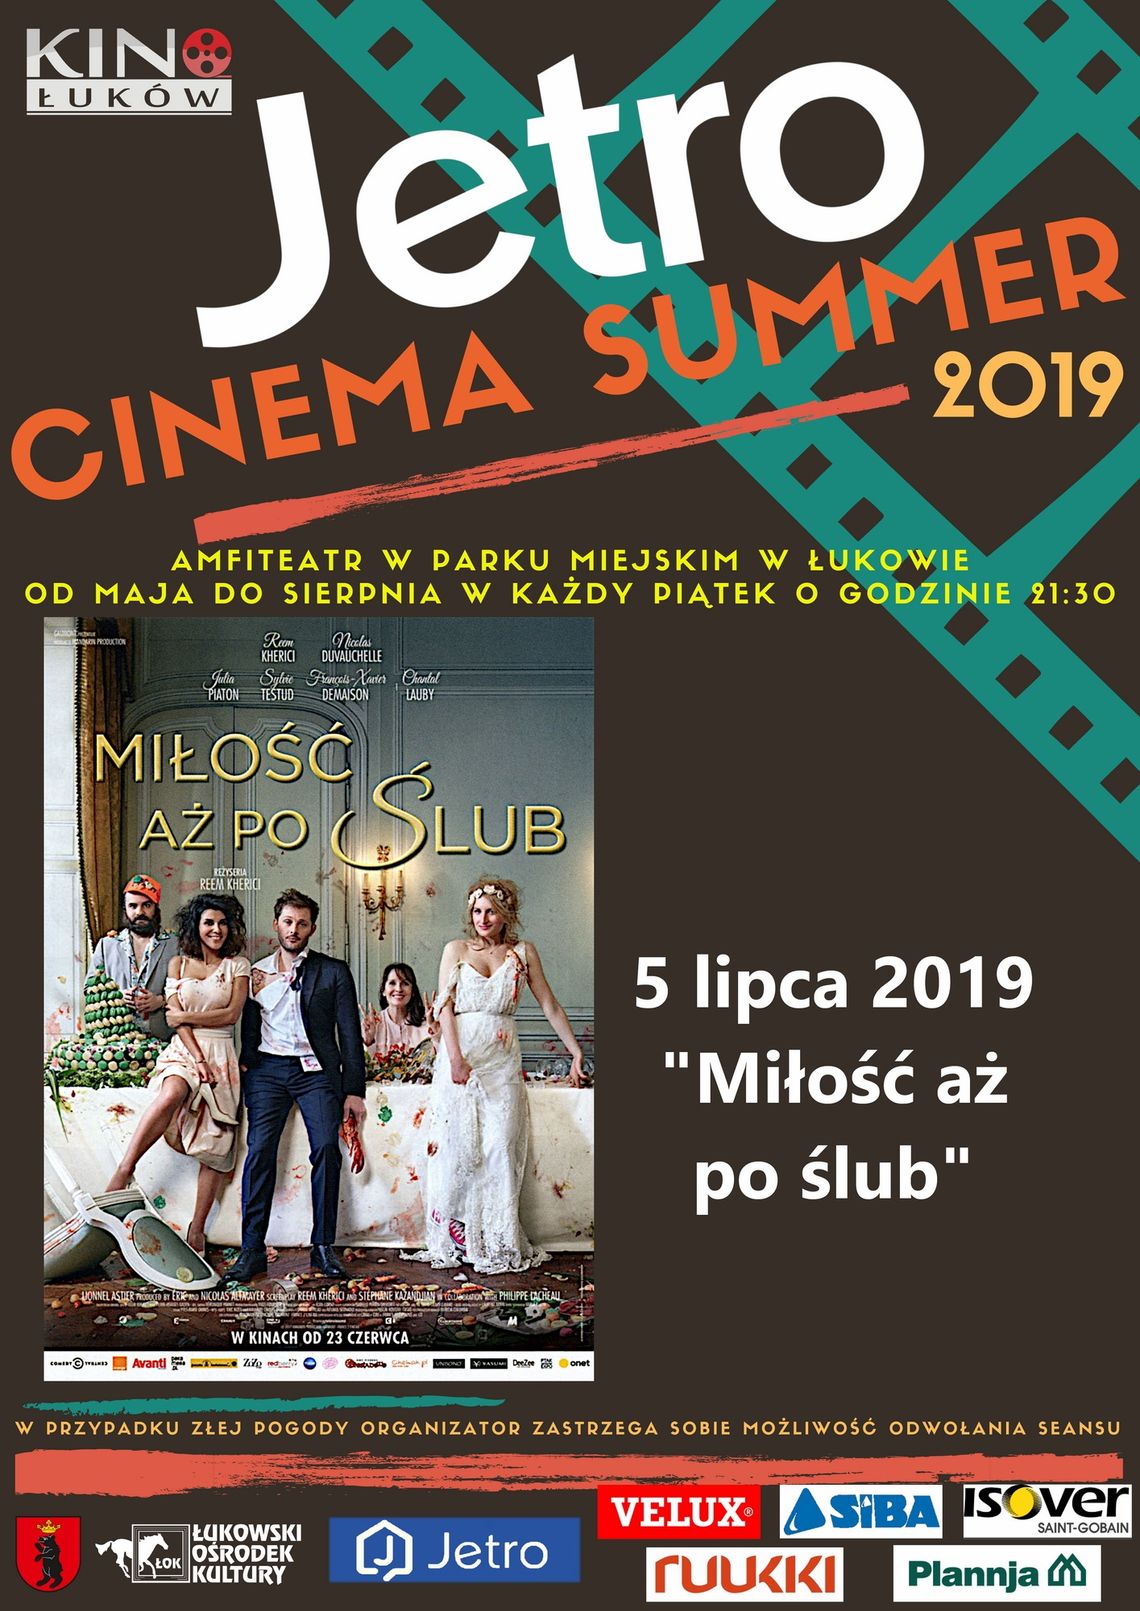 Jetro Cinema Summer 2019 "Miłość aż po ślub" /5 lipca 2019